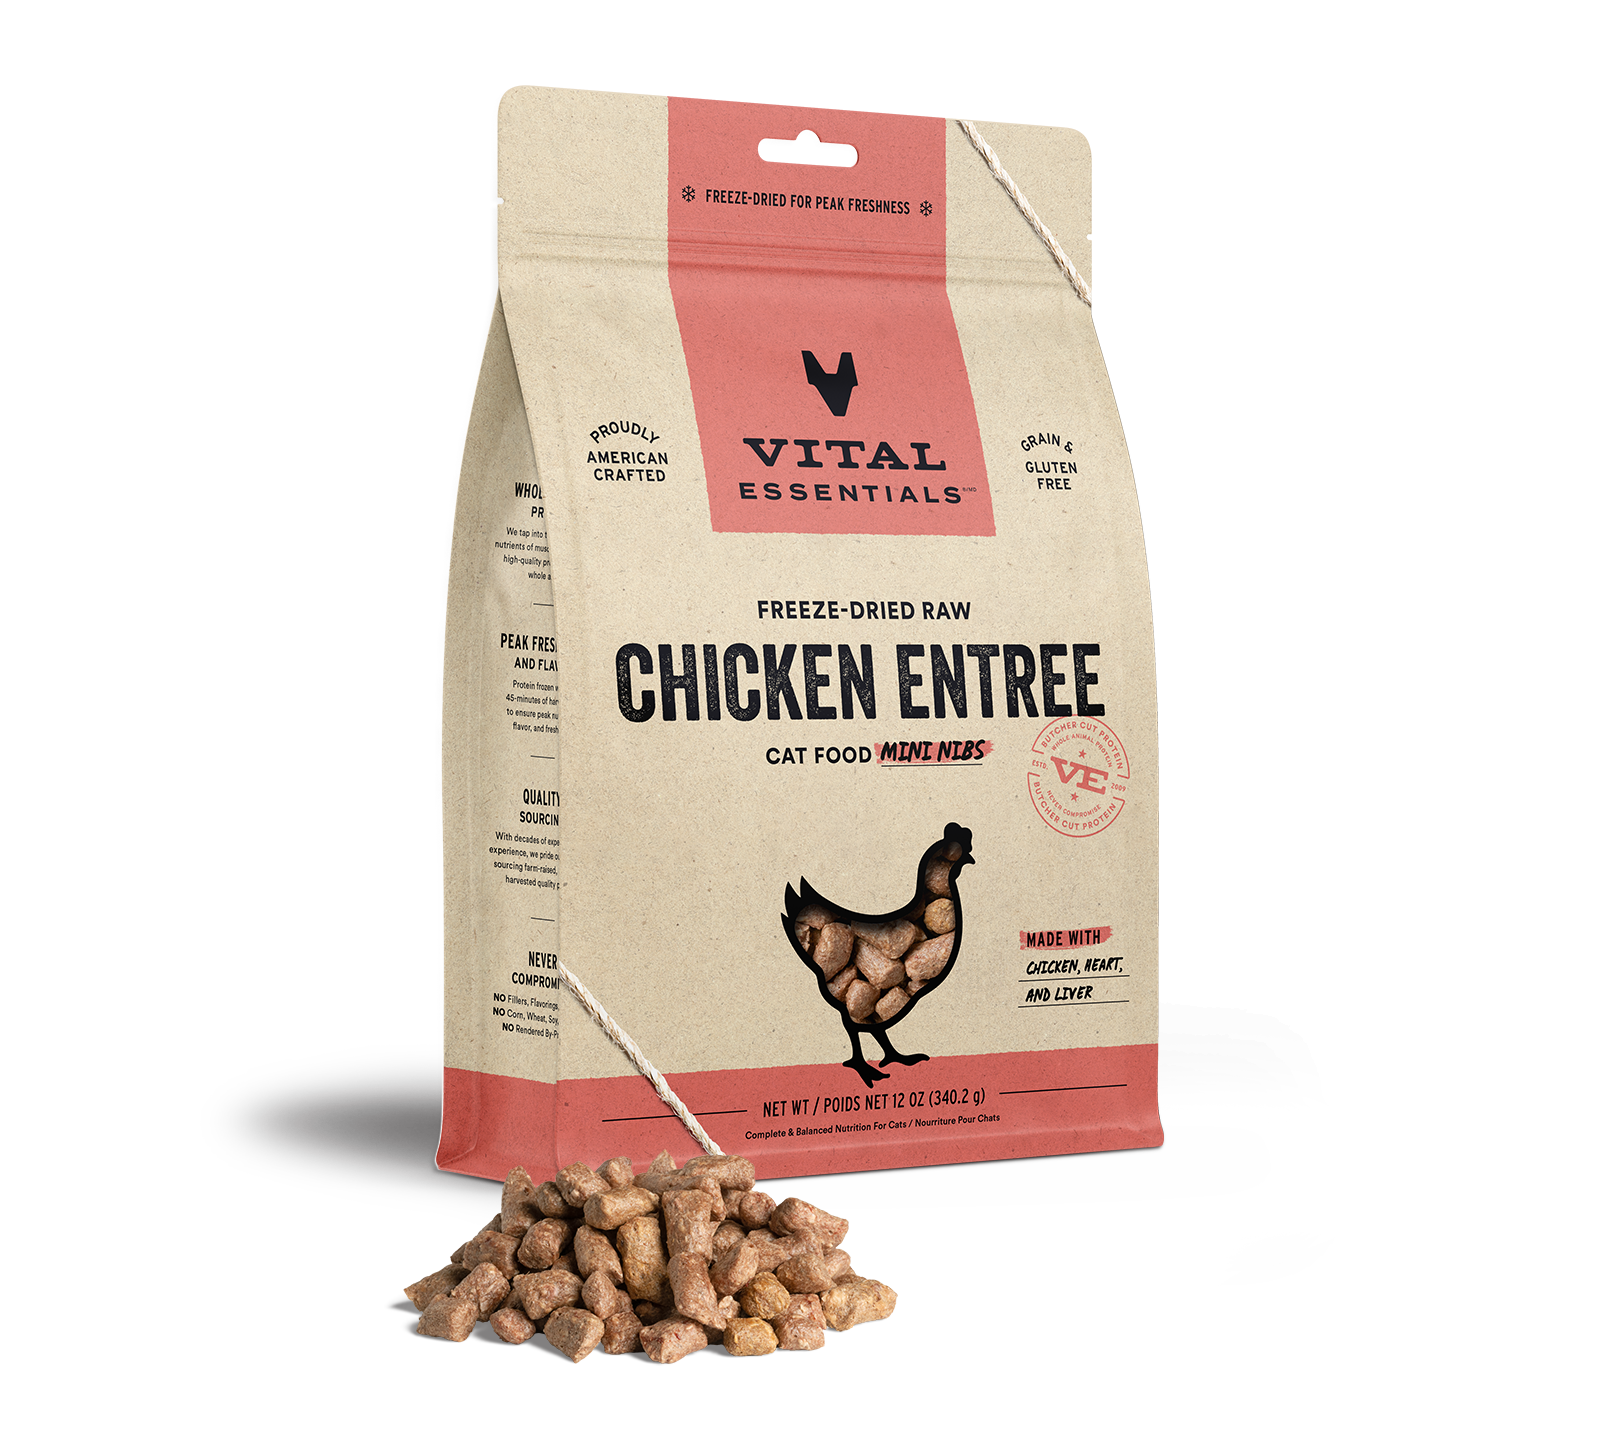 Vital Essentials Freeze-Dried Raw Chicken Entree Cat Food Mini Nibs, 12 oz - Items on Sale Now